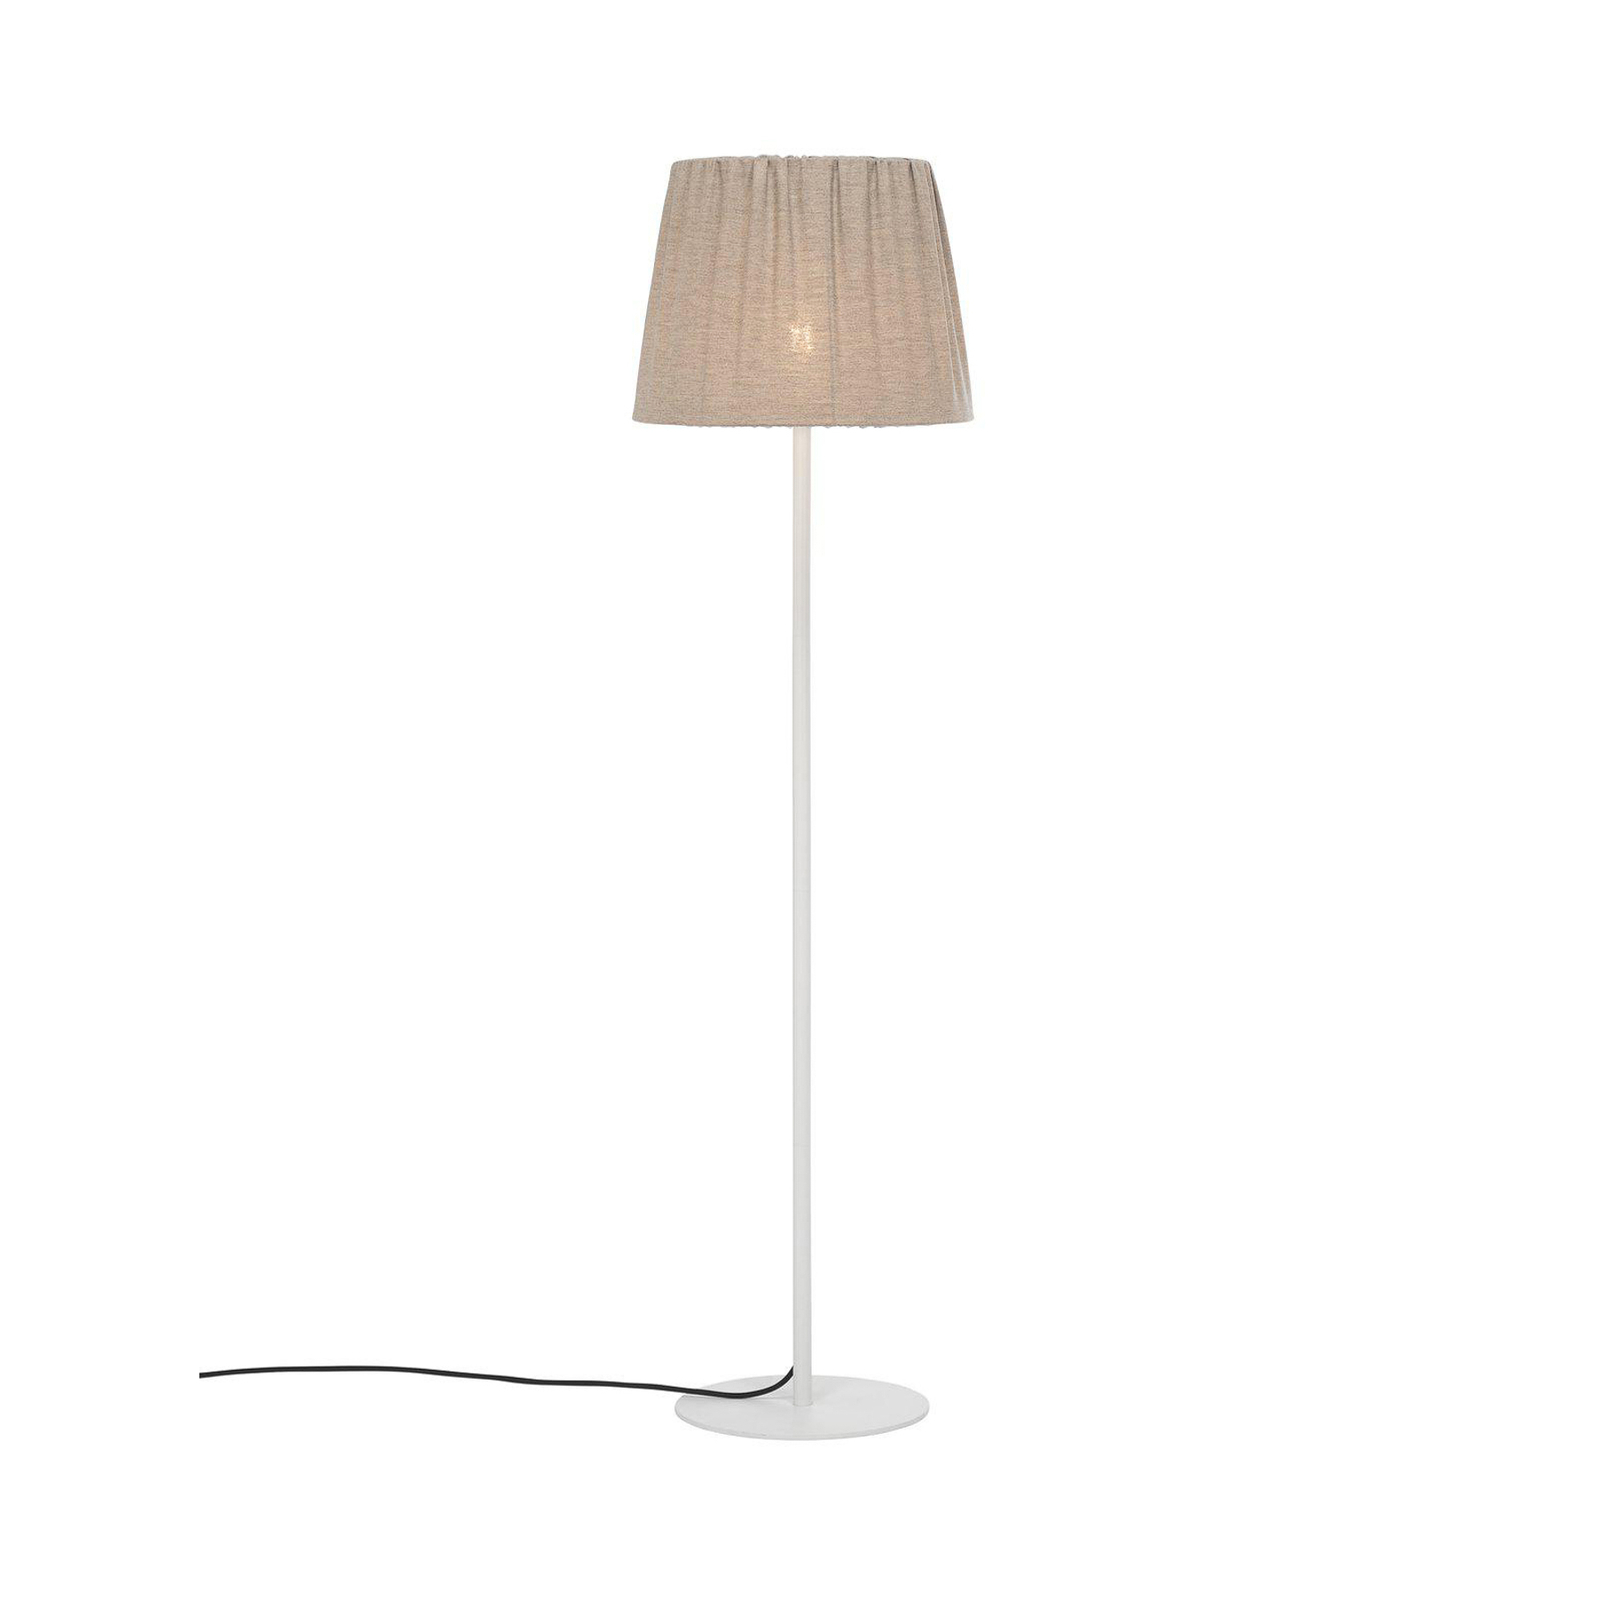 PR Home utendørs gulvlampe Agnar, hvit/brun, 140 cm